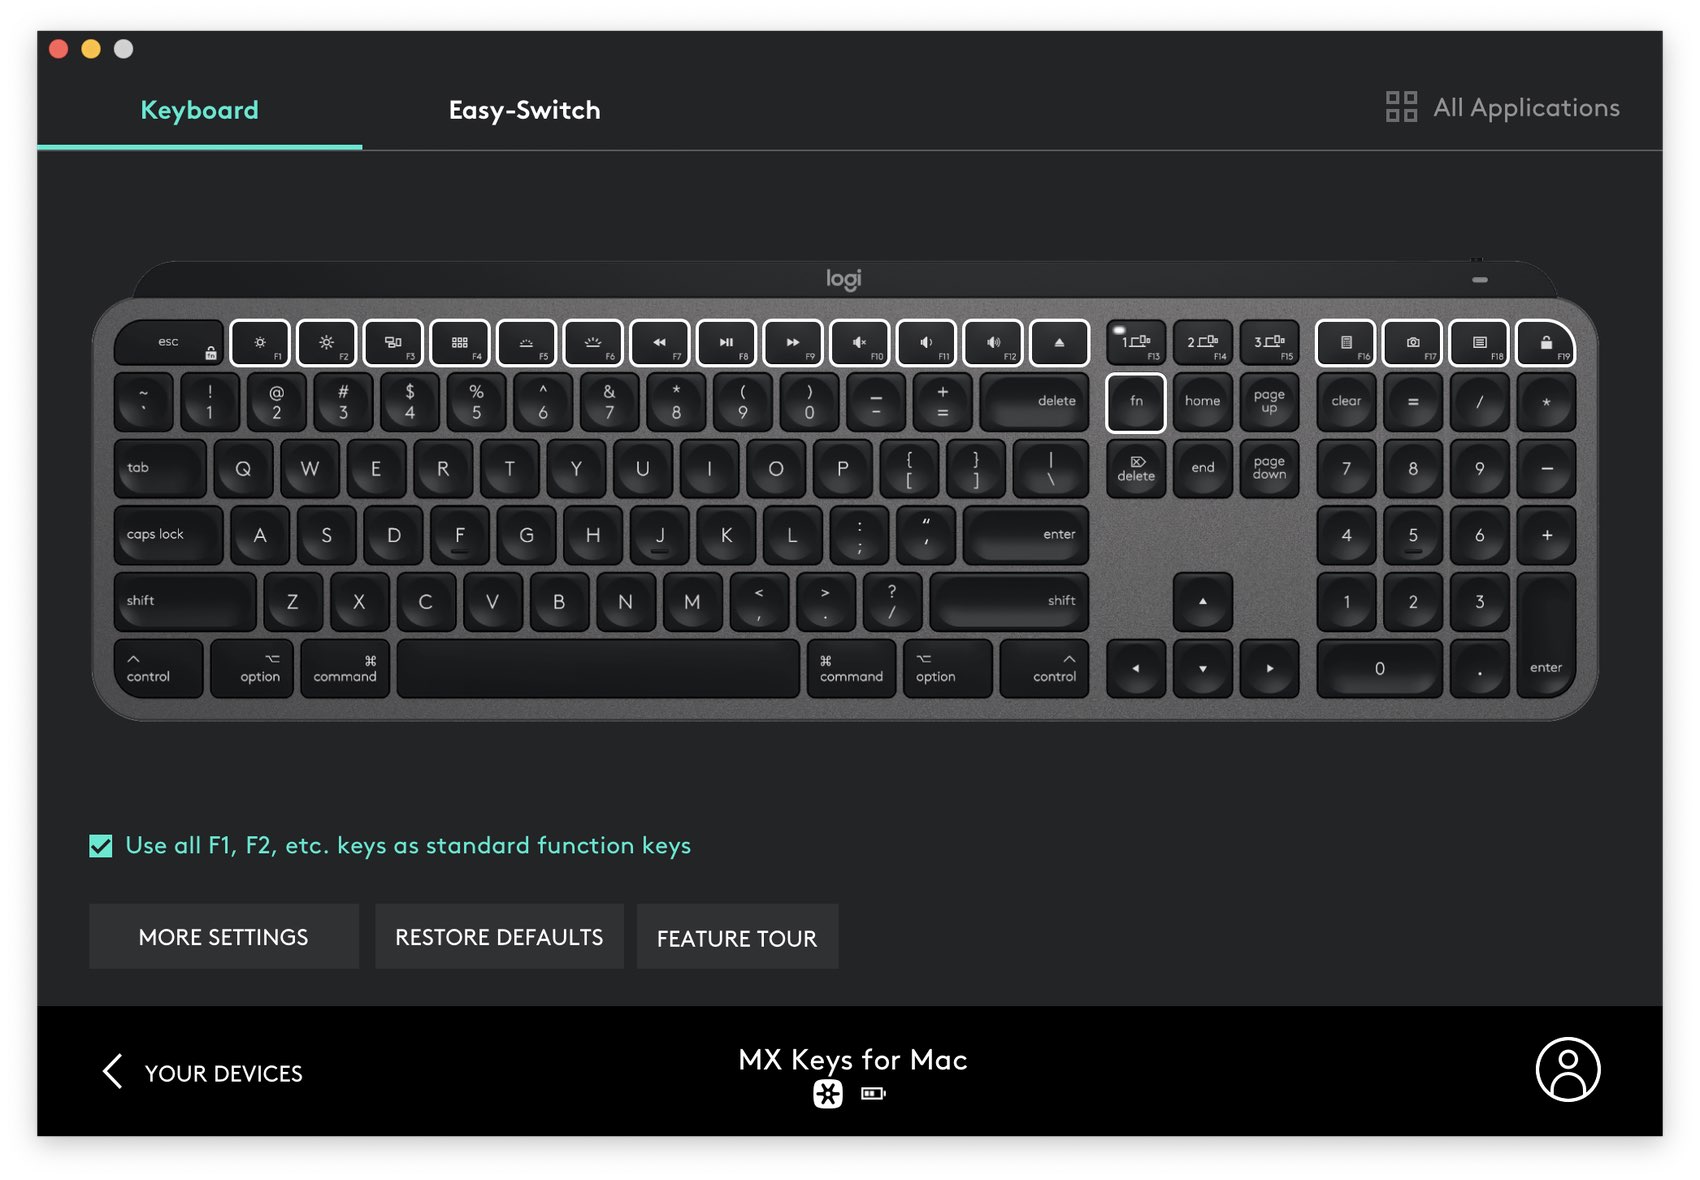 keyboard shortcuts wont work with logitech keyboard on mac